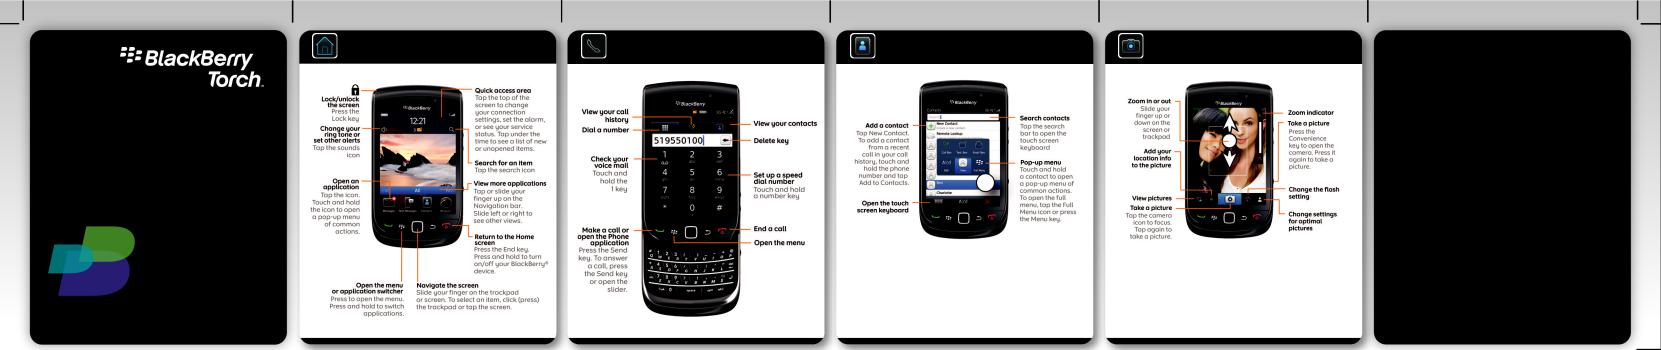 Blackberry Torch 9800 User Manual